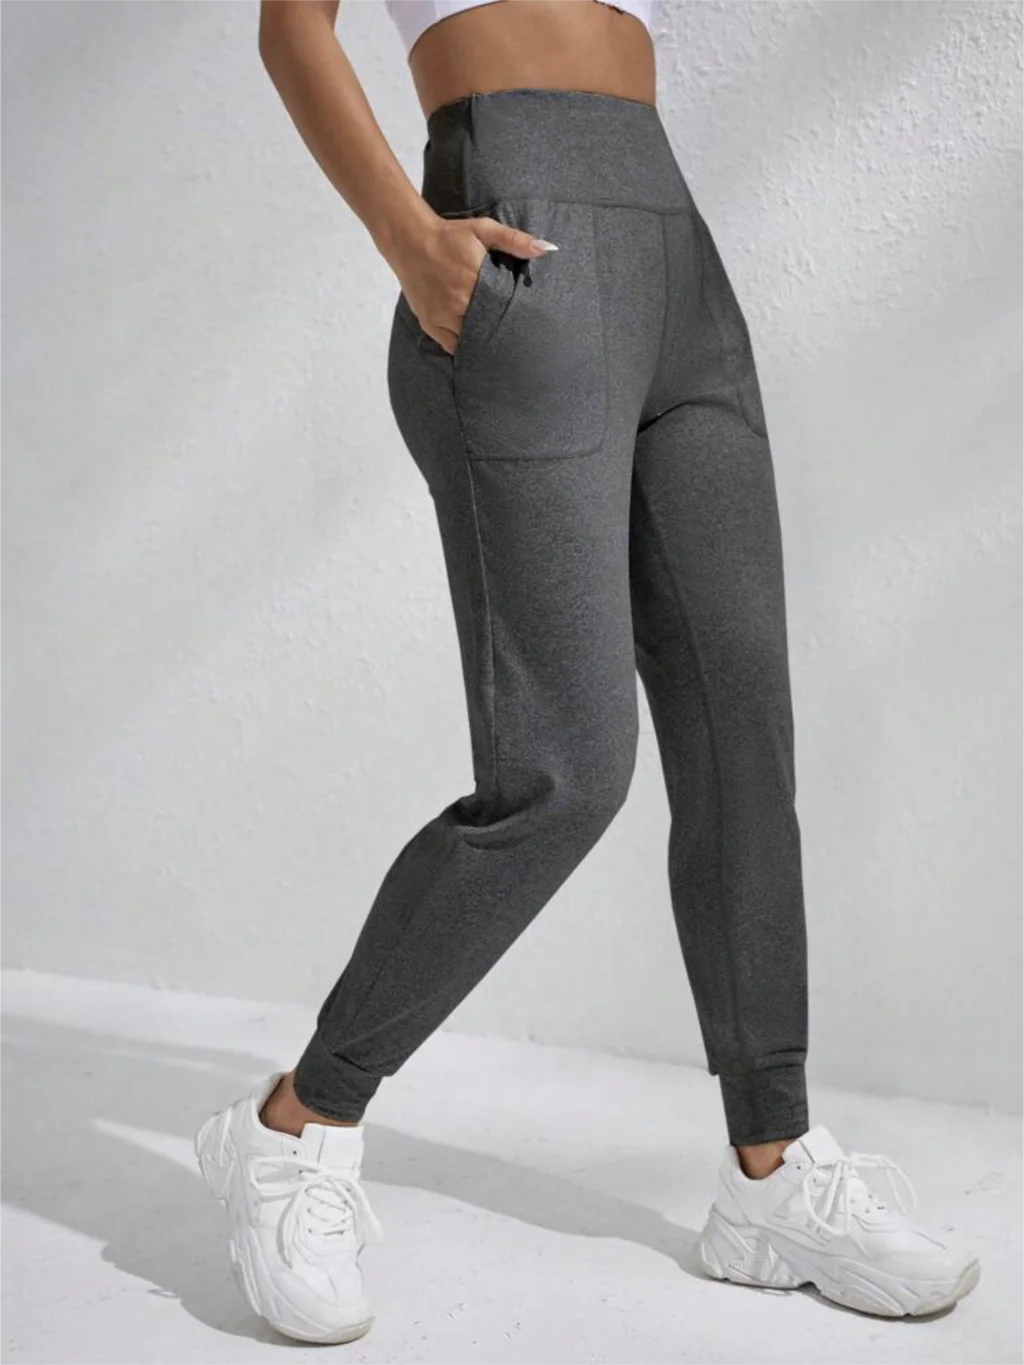 

High Waisted Yoga Pants Women Solid Color Casual Wide Waistband Slant Pocket Sport Pants Workout Leggings Black Breathable